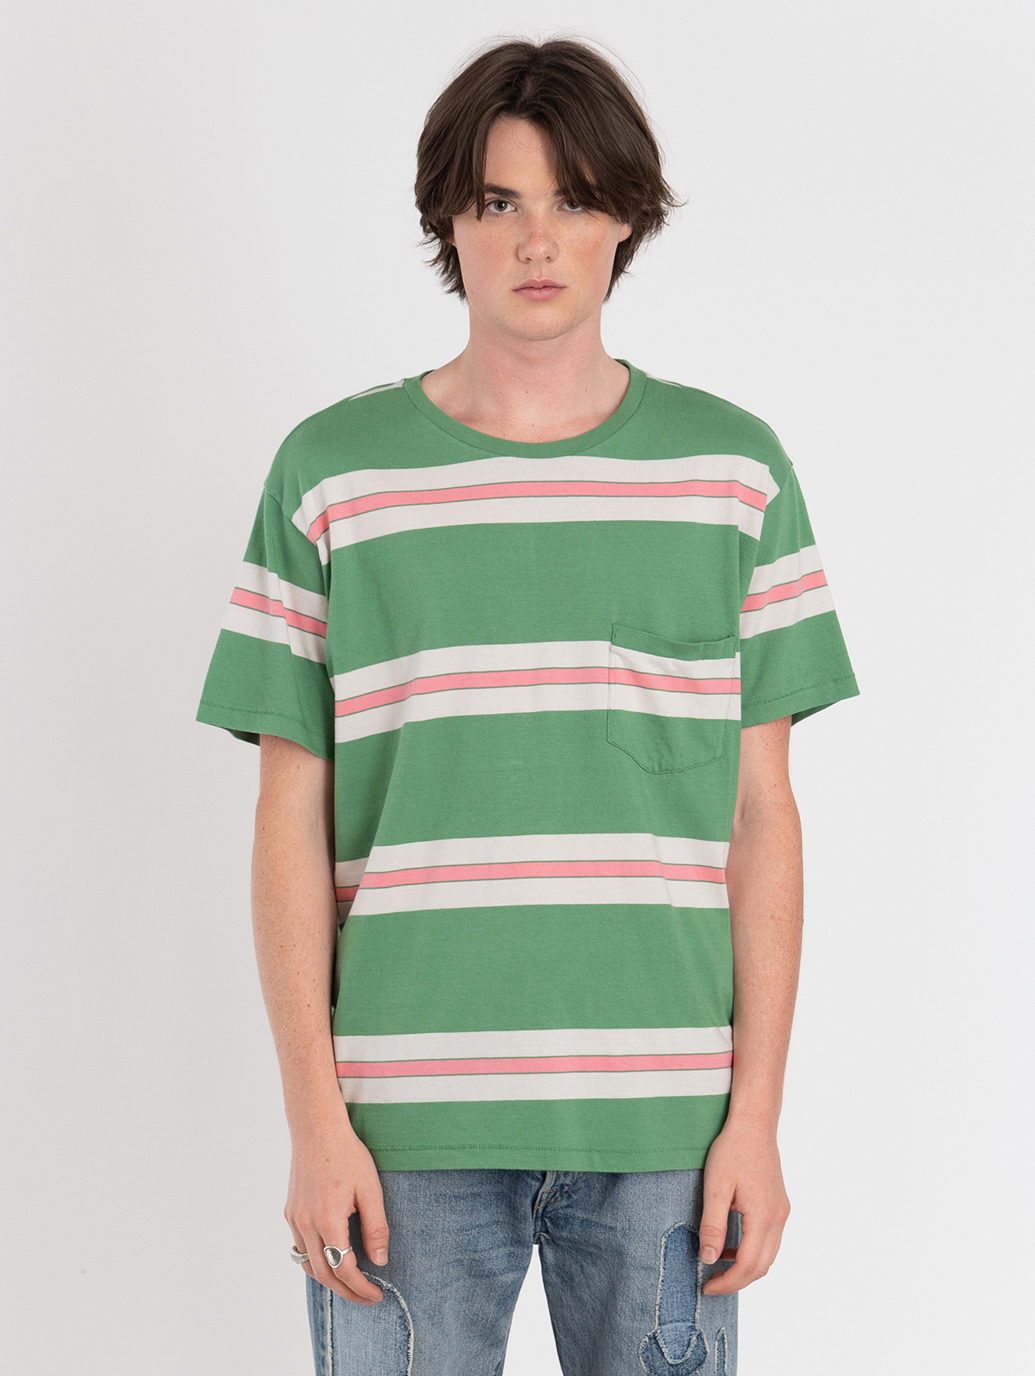 LEVI'S® VINTAGE CLOTHING 1940'S SPLIT HEM Tシャツ WATERMELON PINK GREEN CREAM